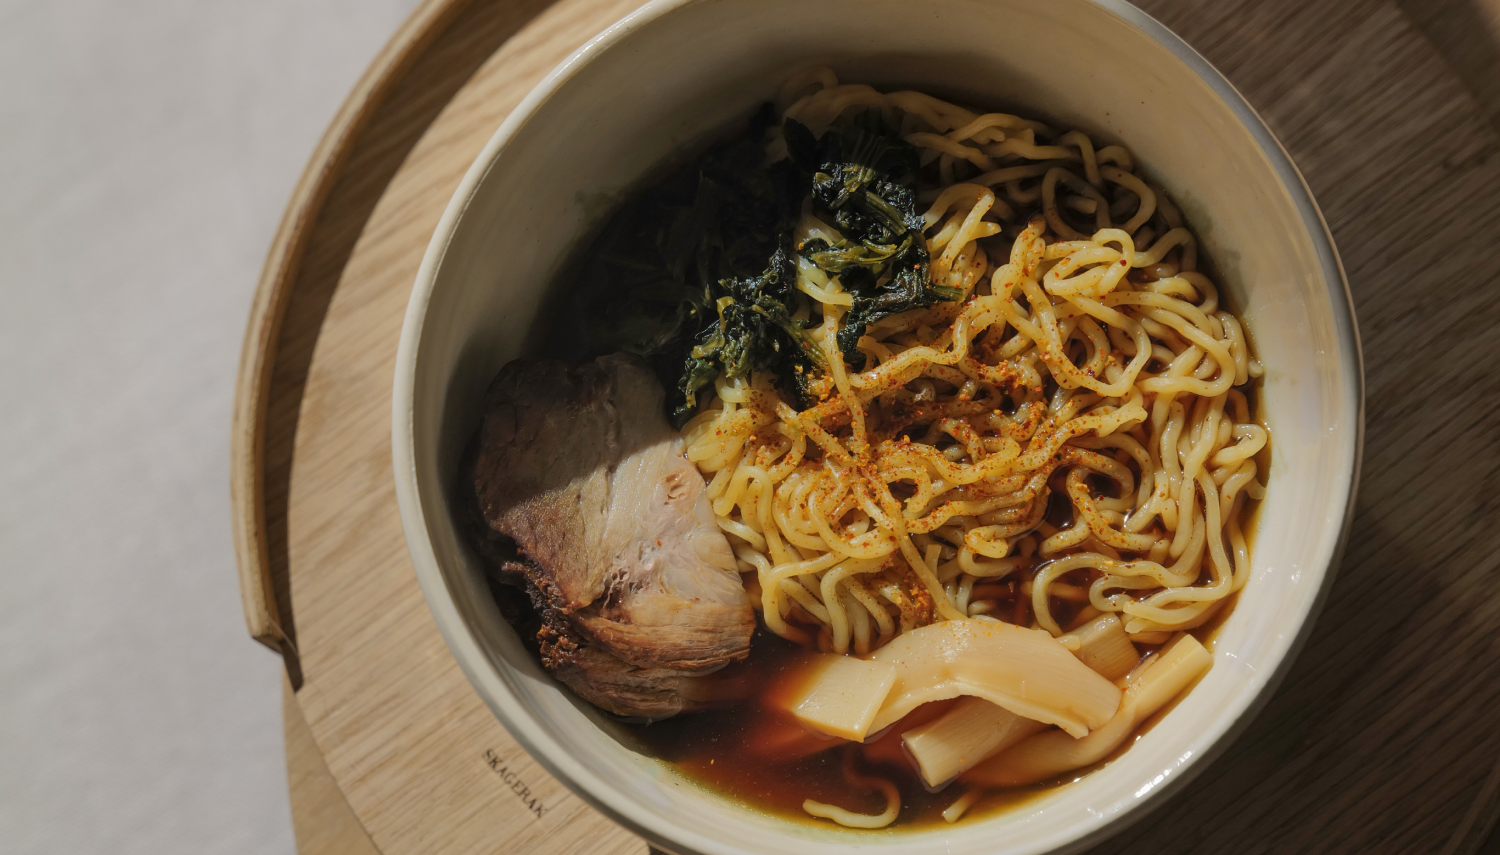 Magowayasashii: The Art of Thoughtful Eating